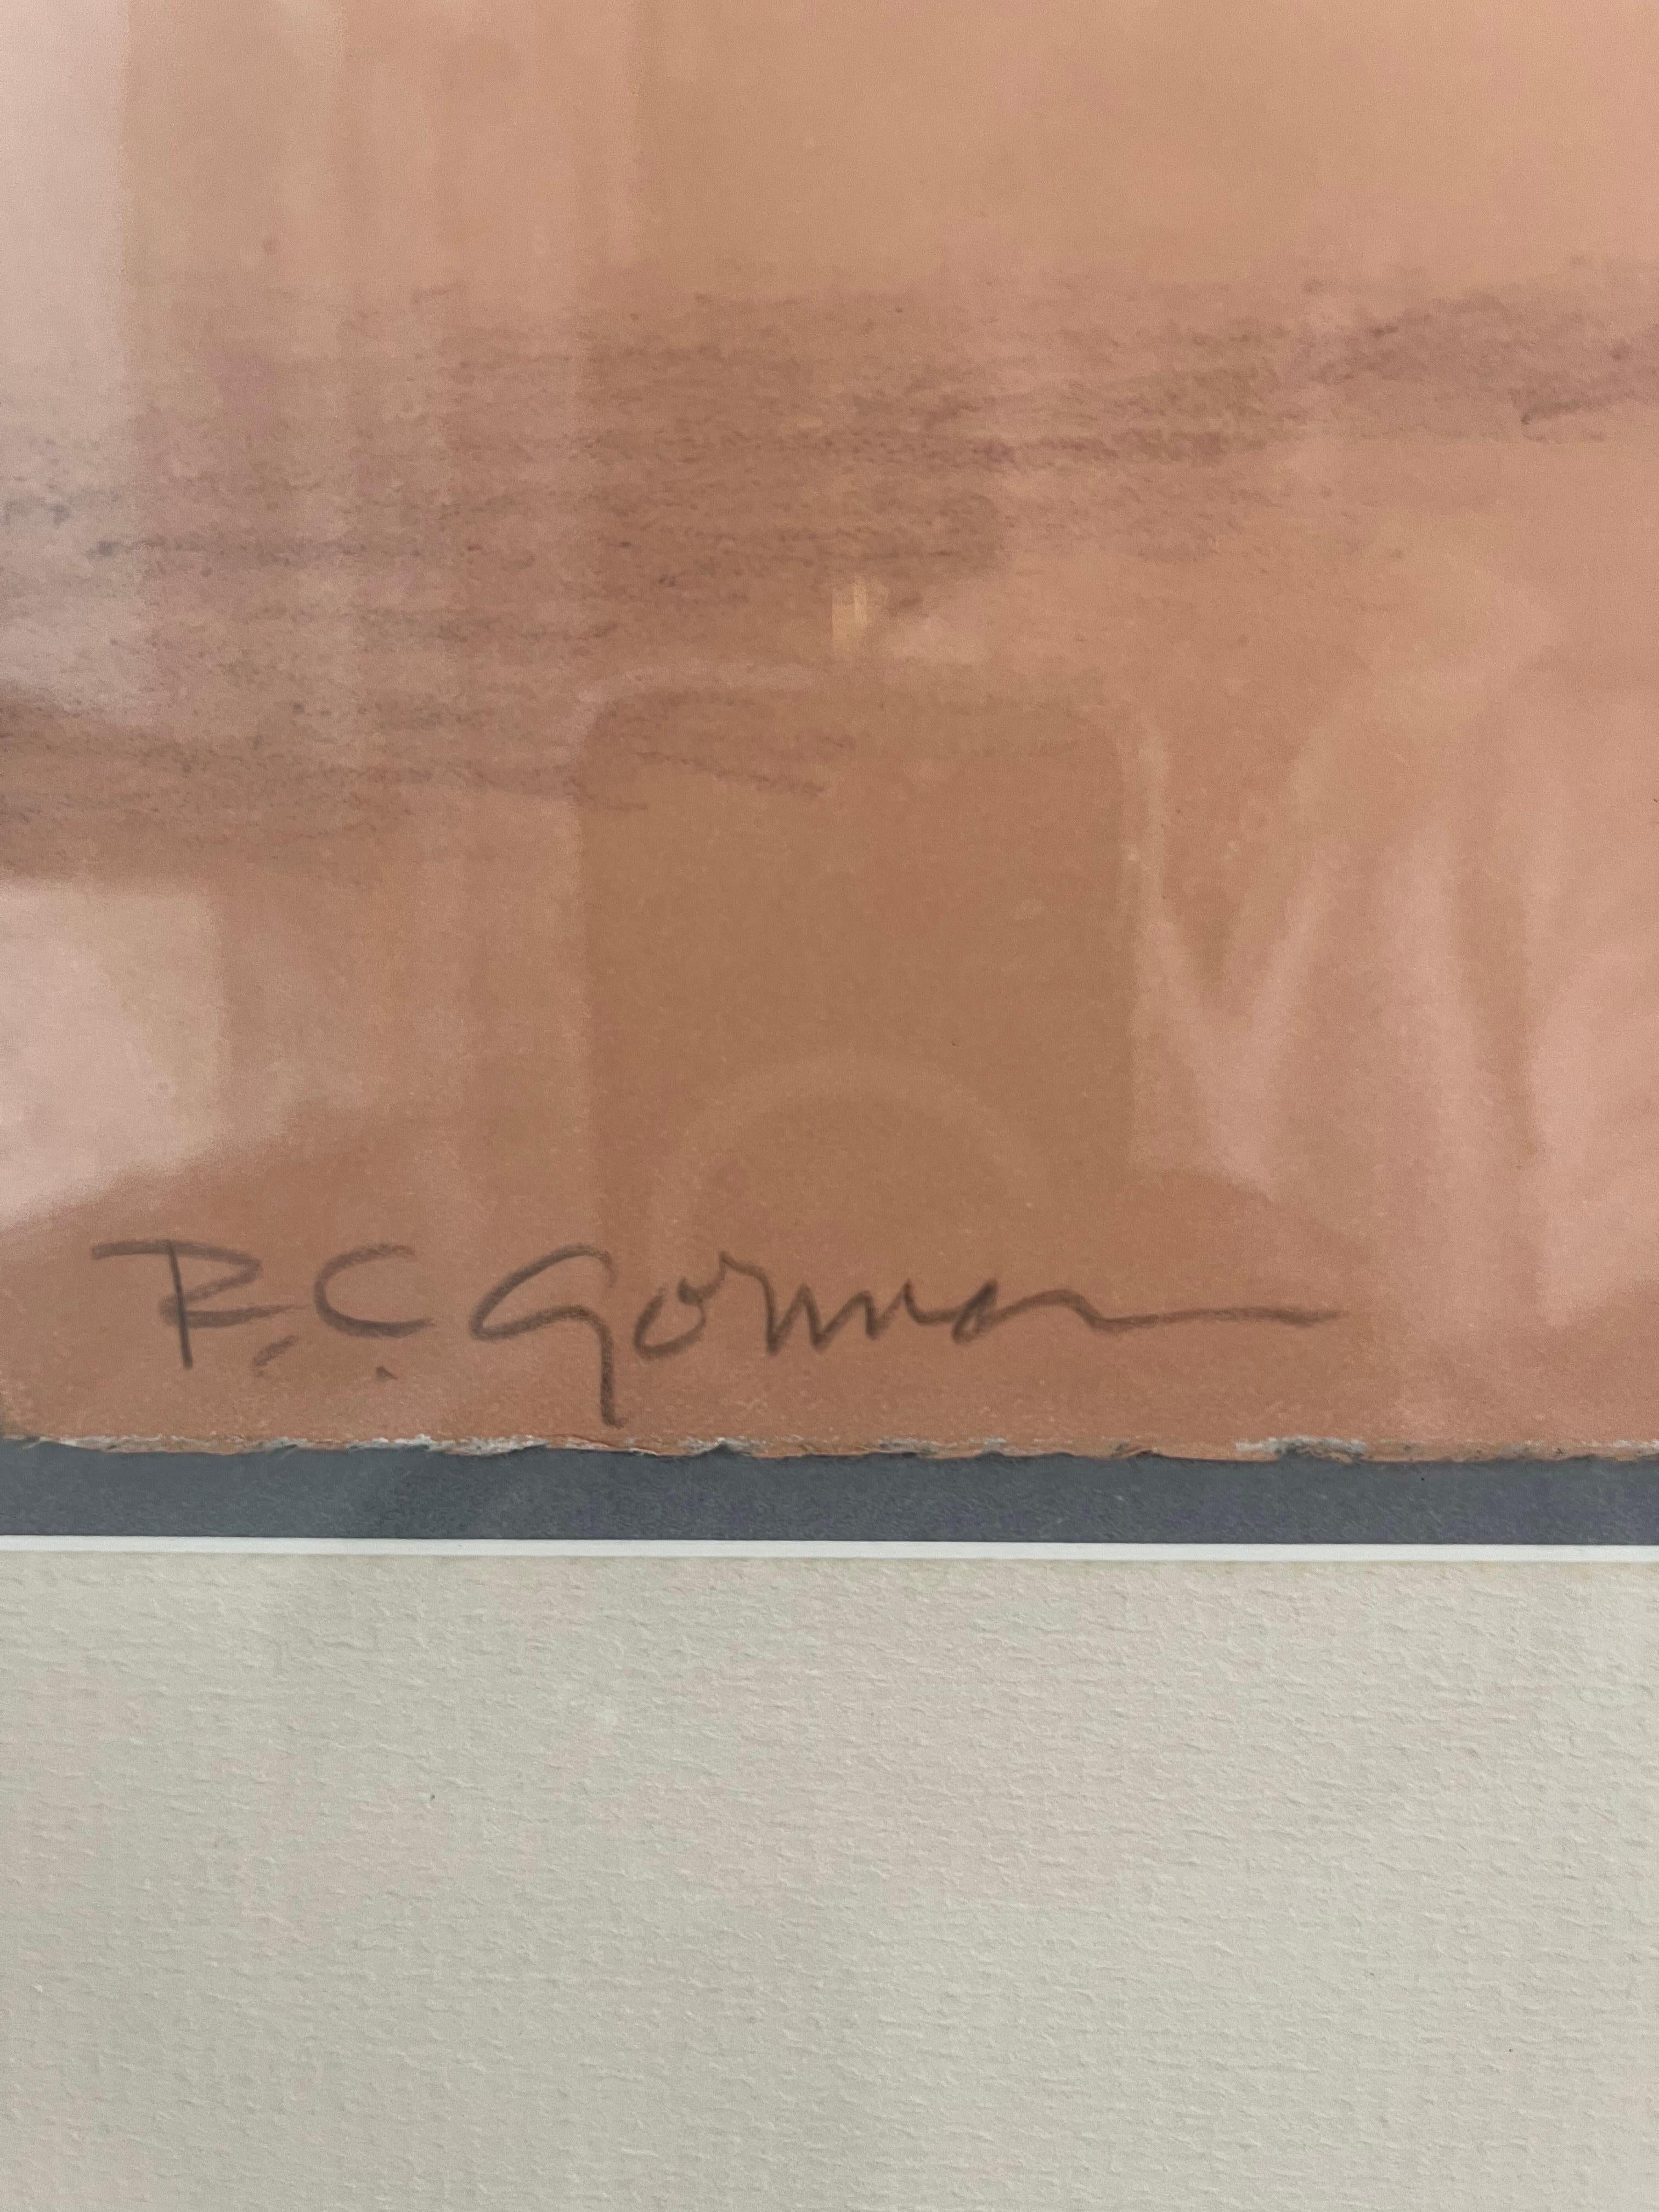 American RC Gorman Expectation Lithograph Original For Sale